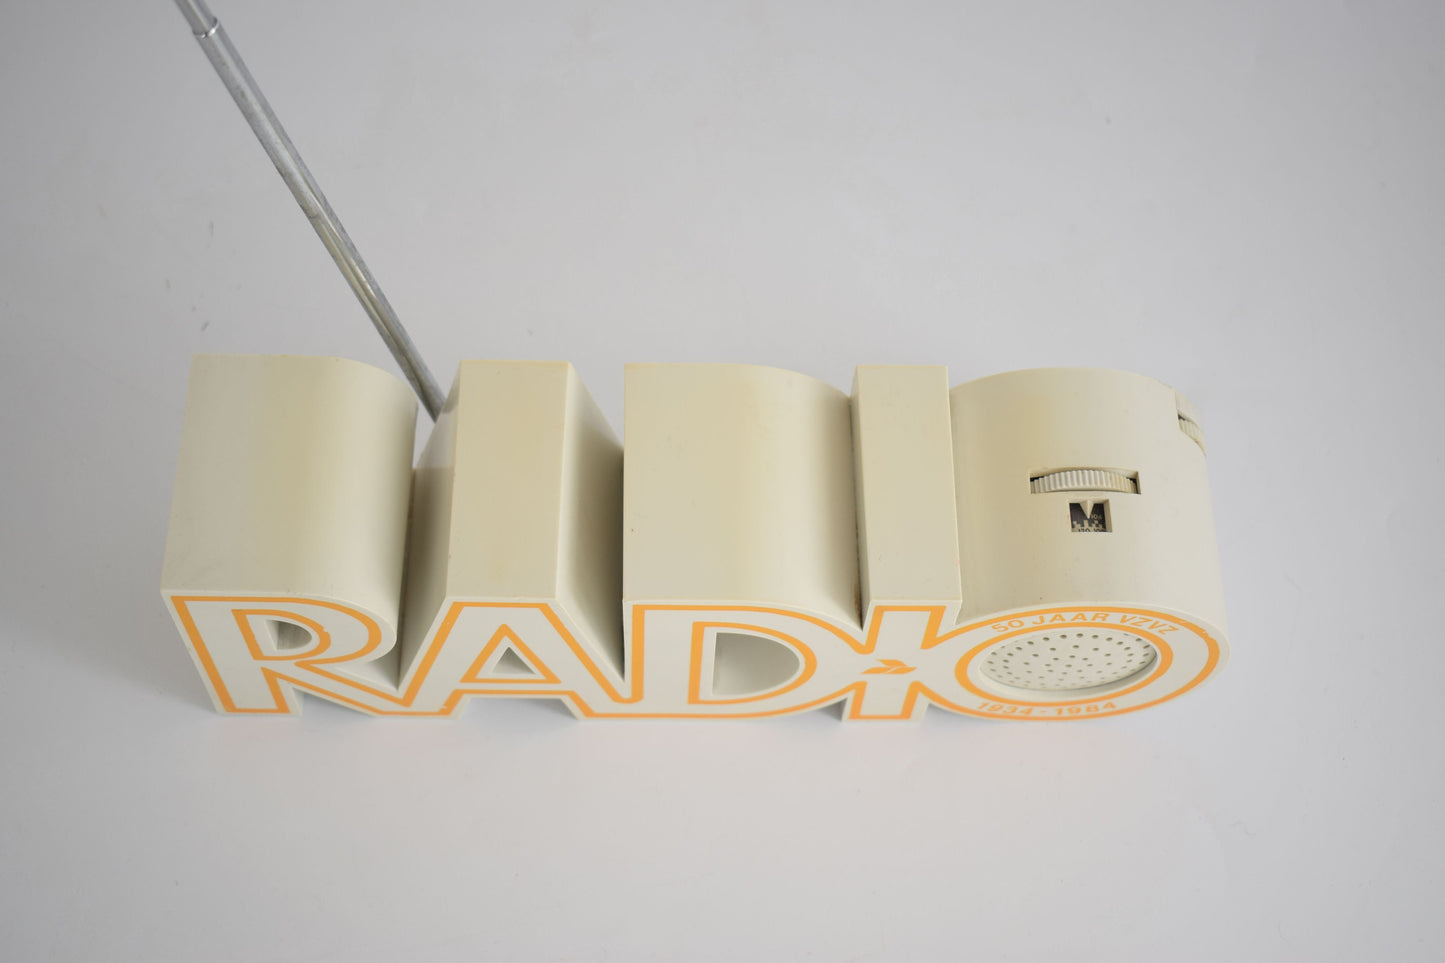 Radio radio Modelo en forma de palabra radio.